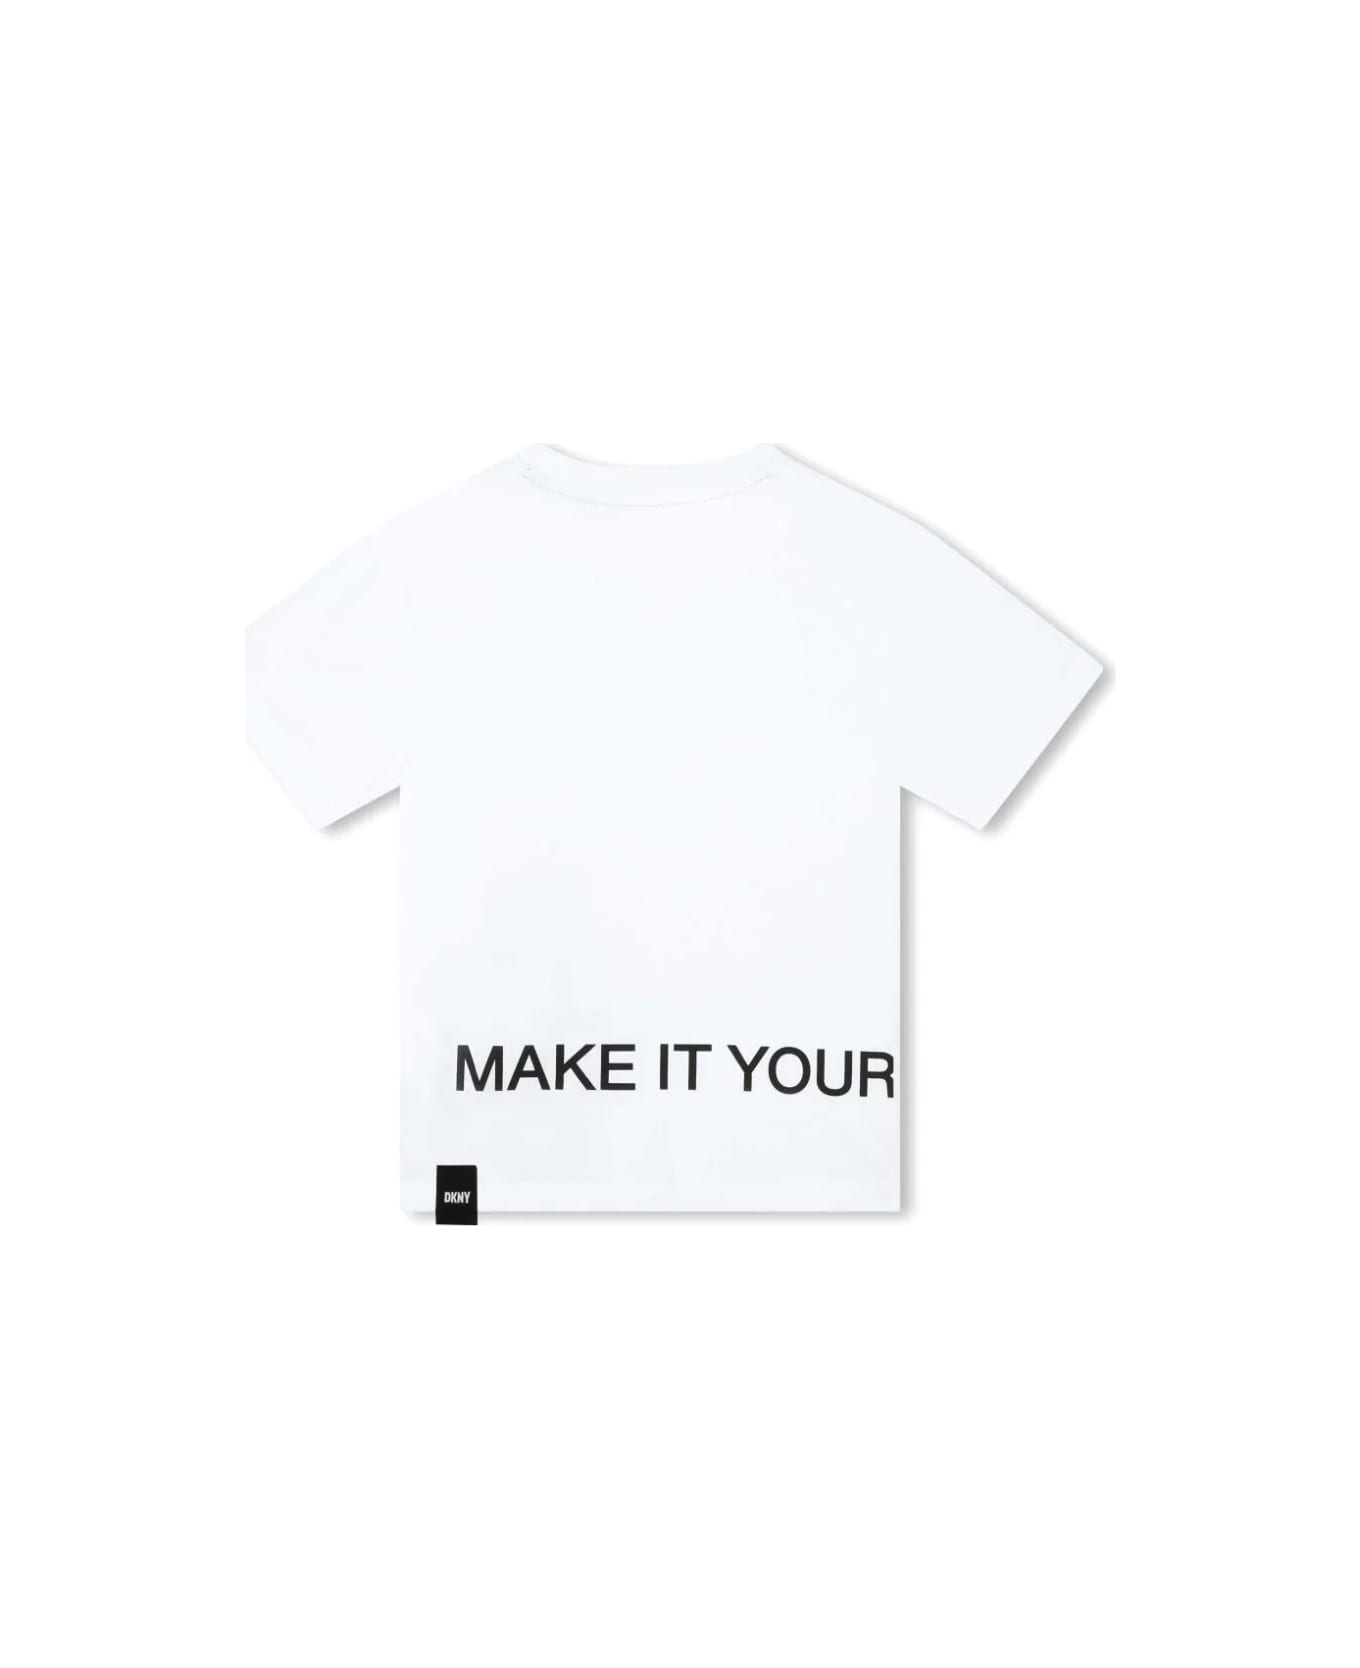 DKNY Printed T-shirt - White